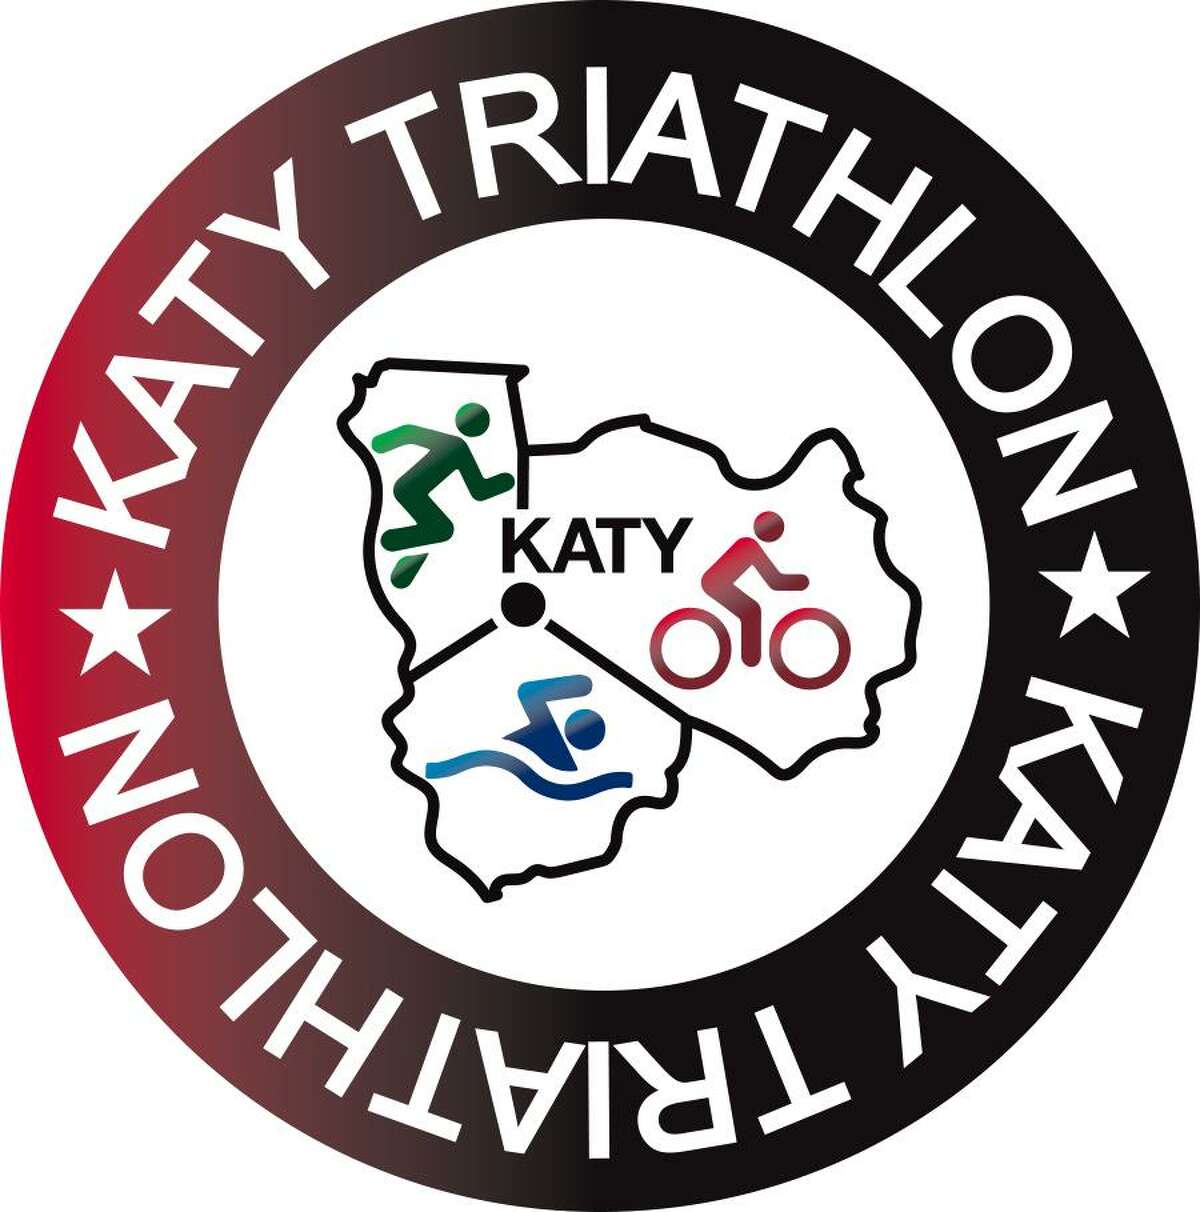 Katy Triathlon broadens appeal with new race categories, return of pre